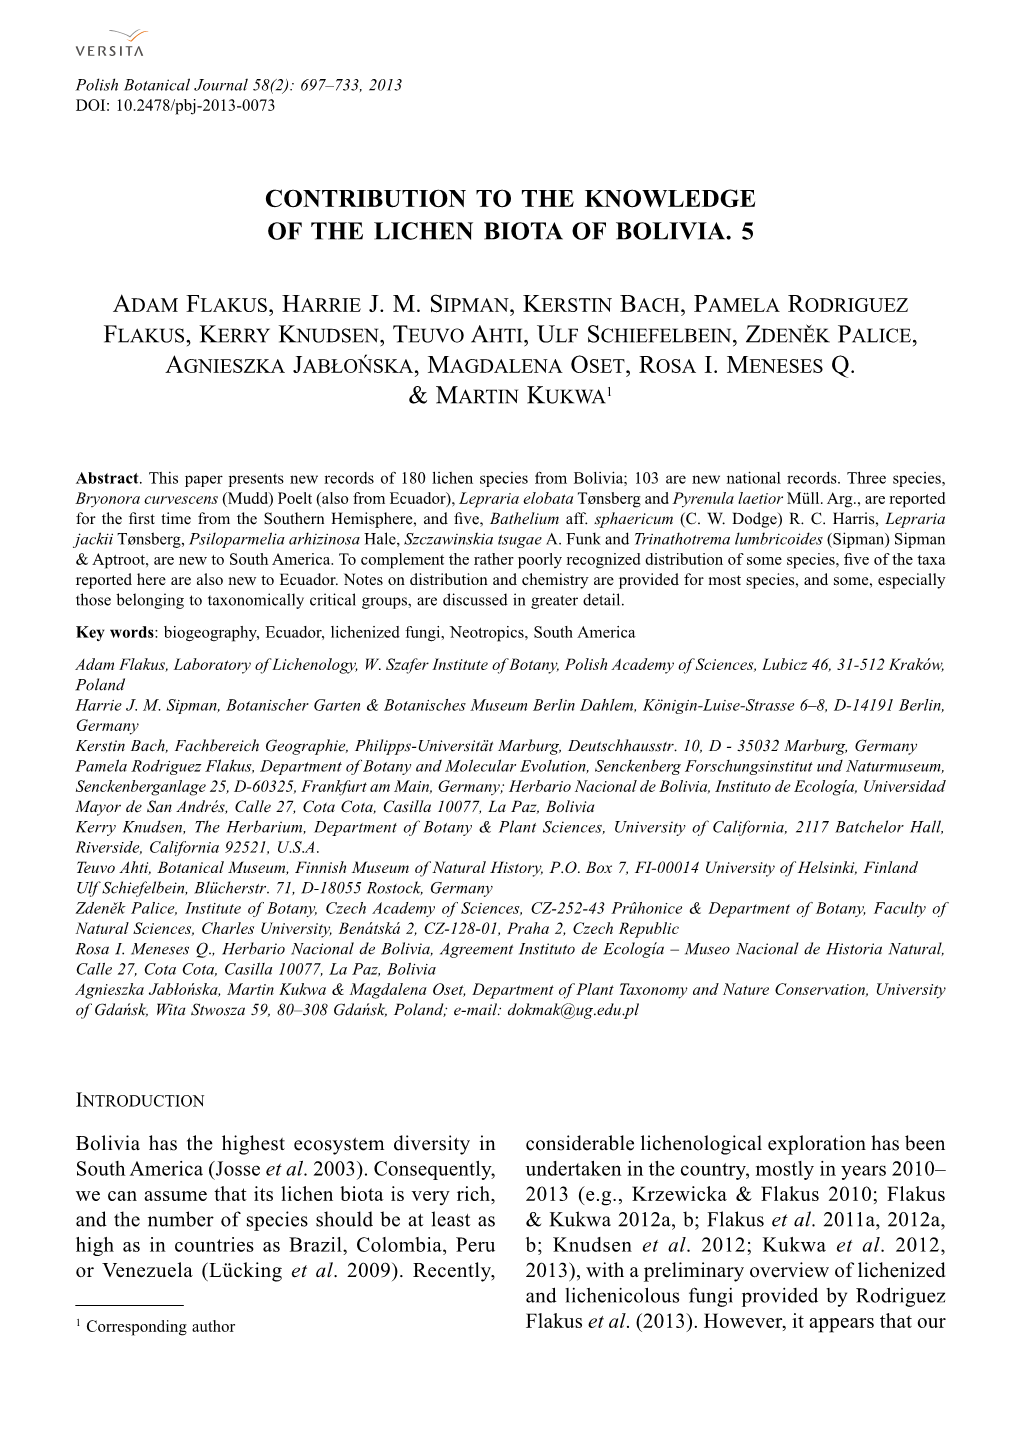 Contribution to the Knowledge of the Lichen Biota of Bolivia